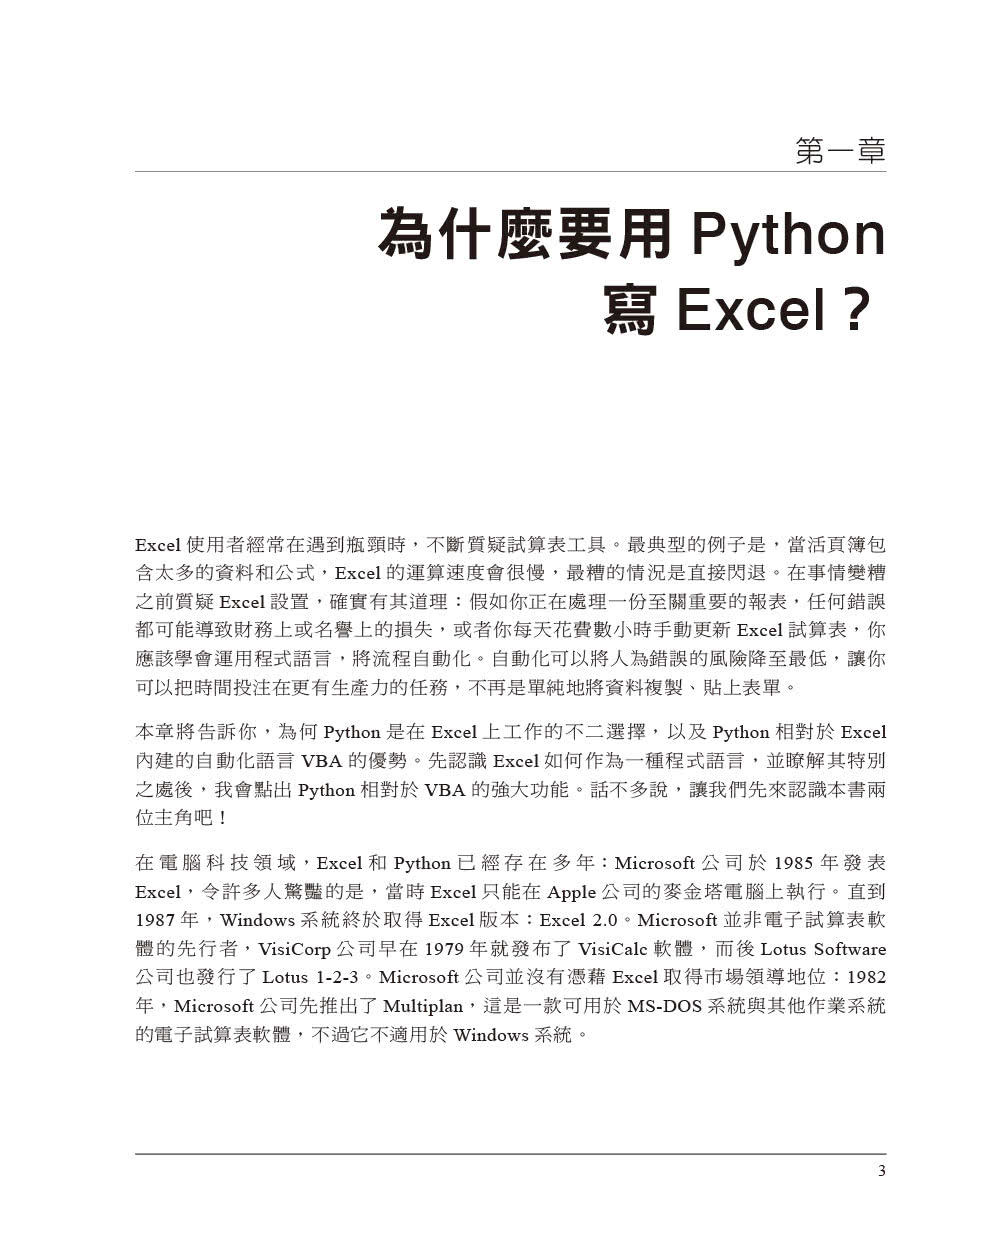 Python for Excel︱自動化與資料分析的現代開發環境